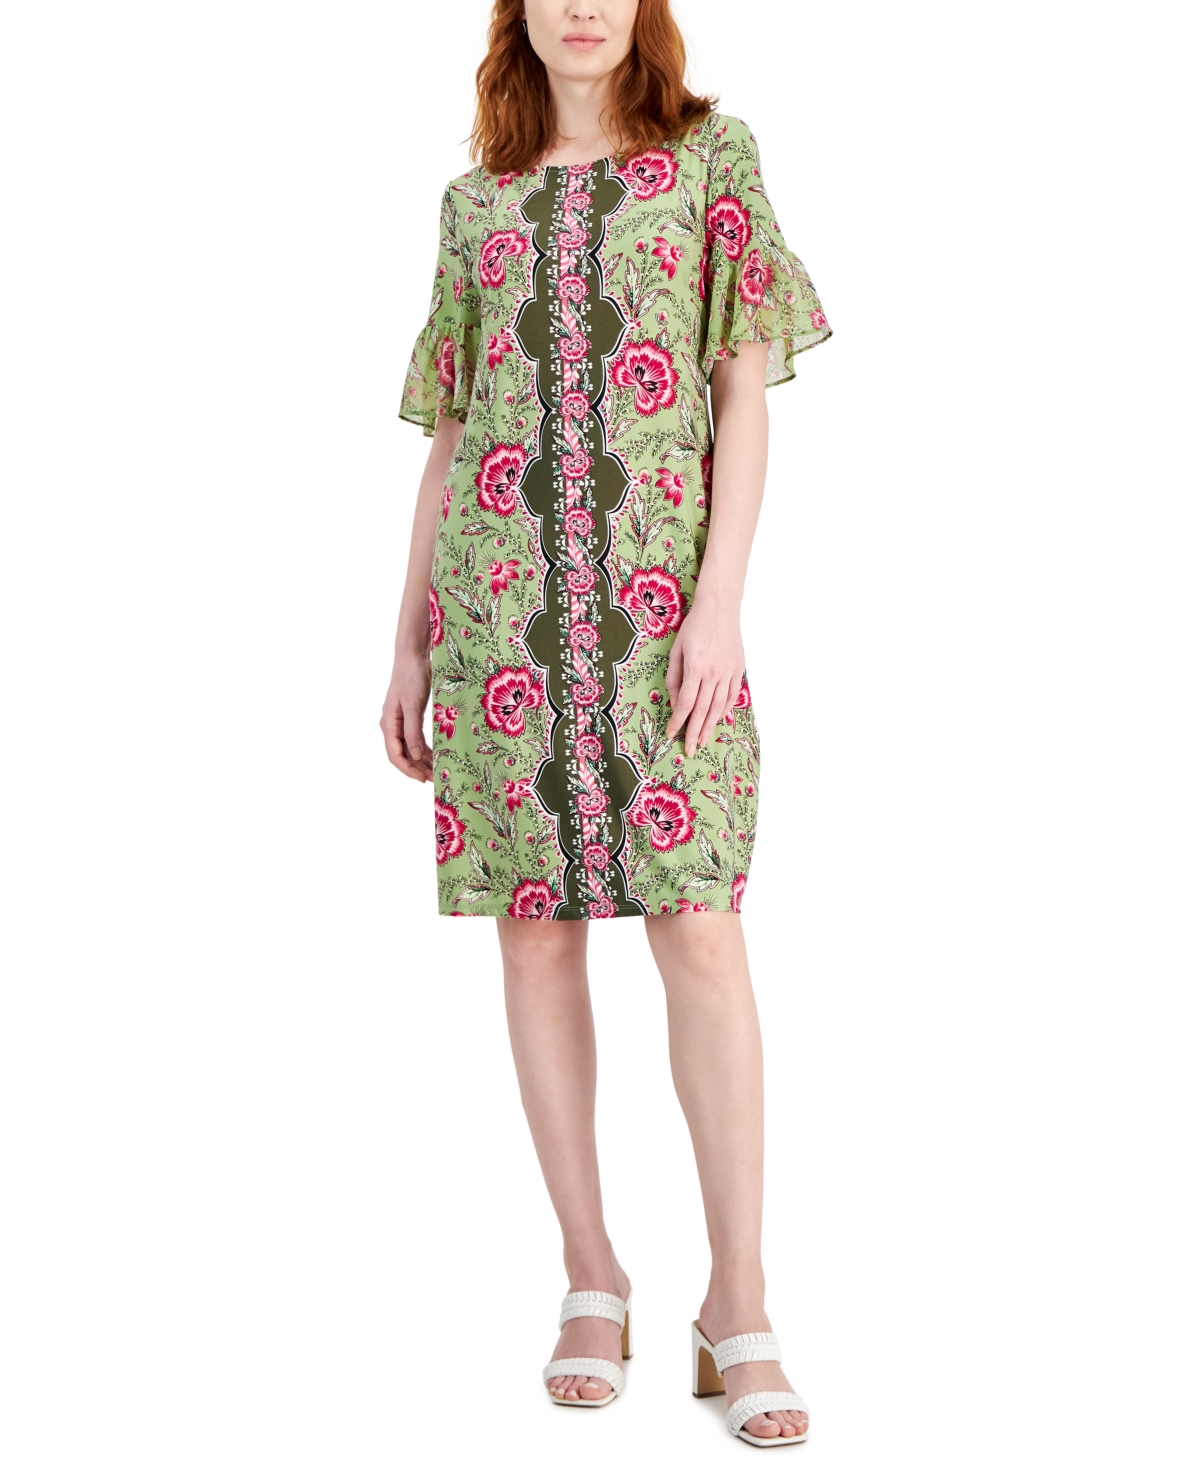 Women's Printed Short Sleeve A-Line Dress, Created for Macy's - Luau Green Combo